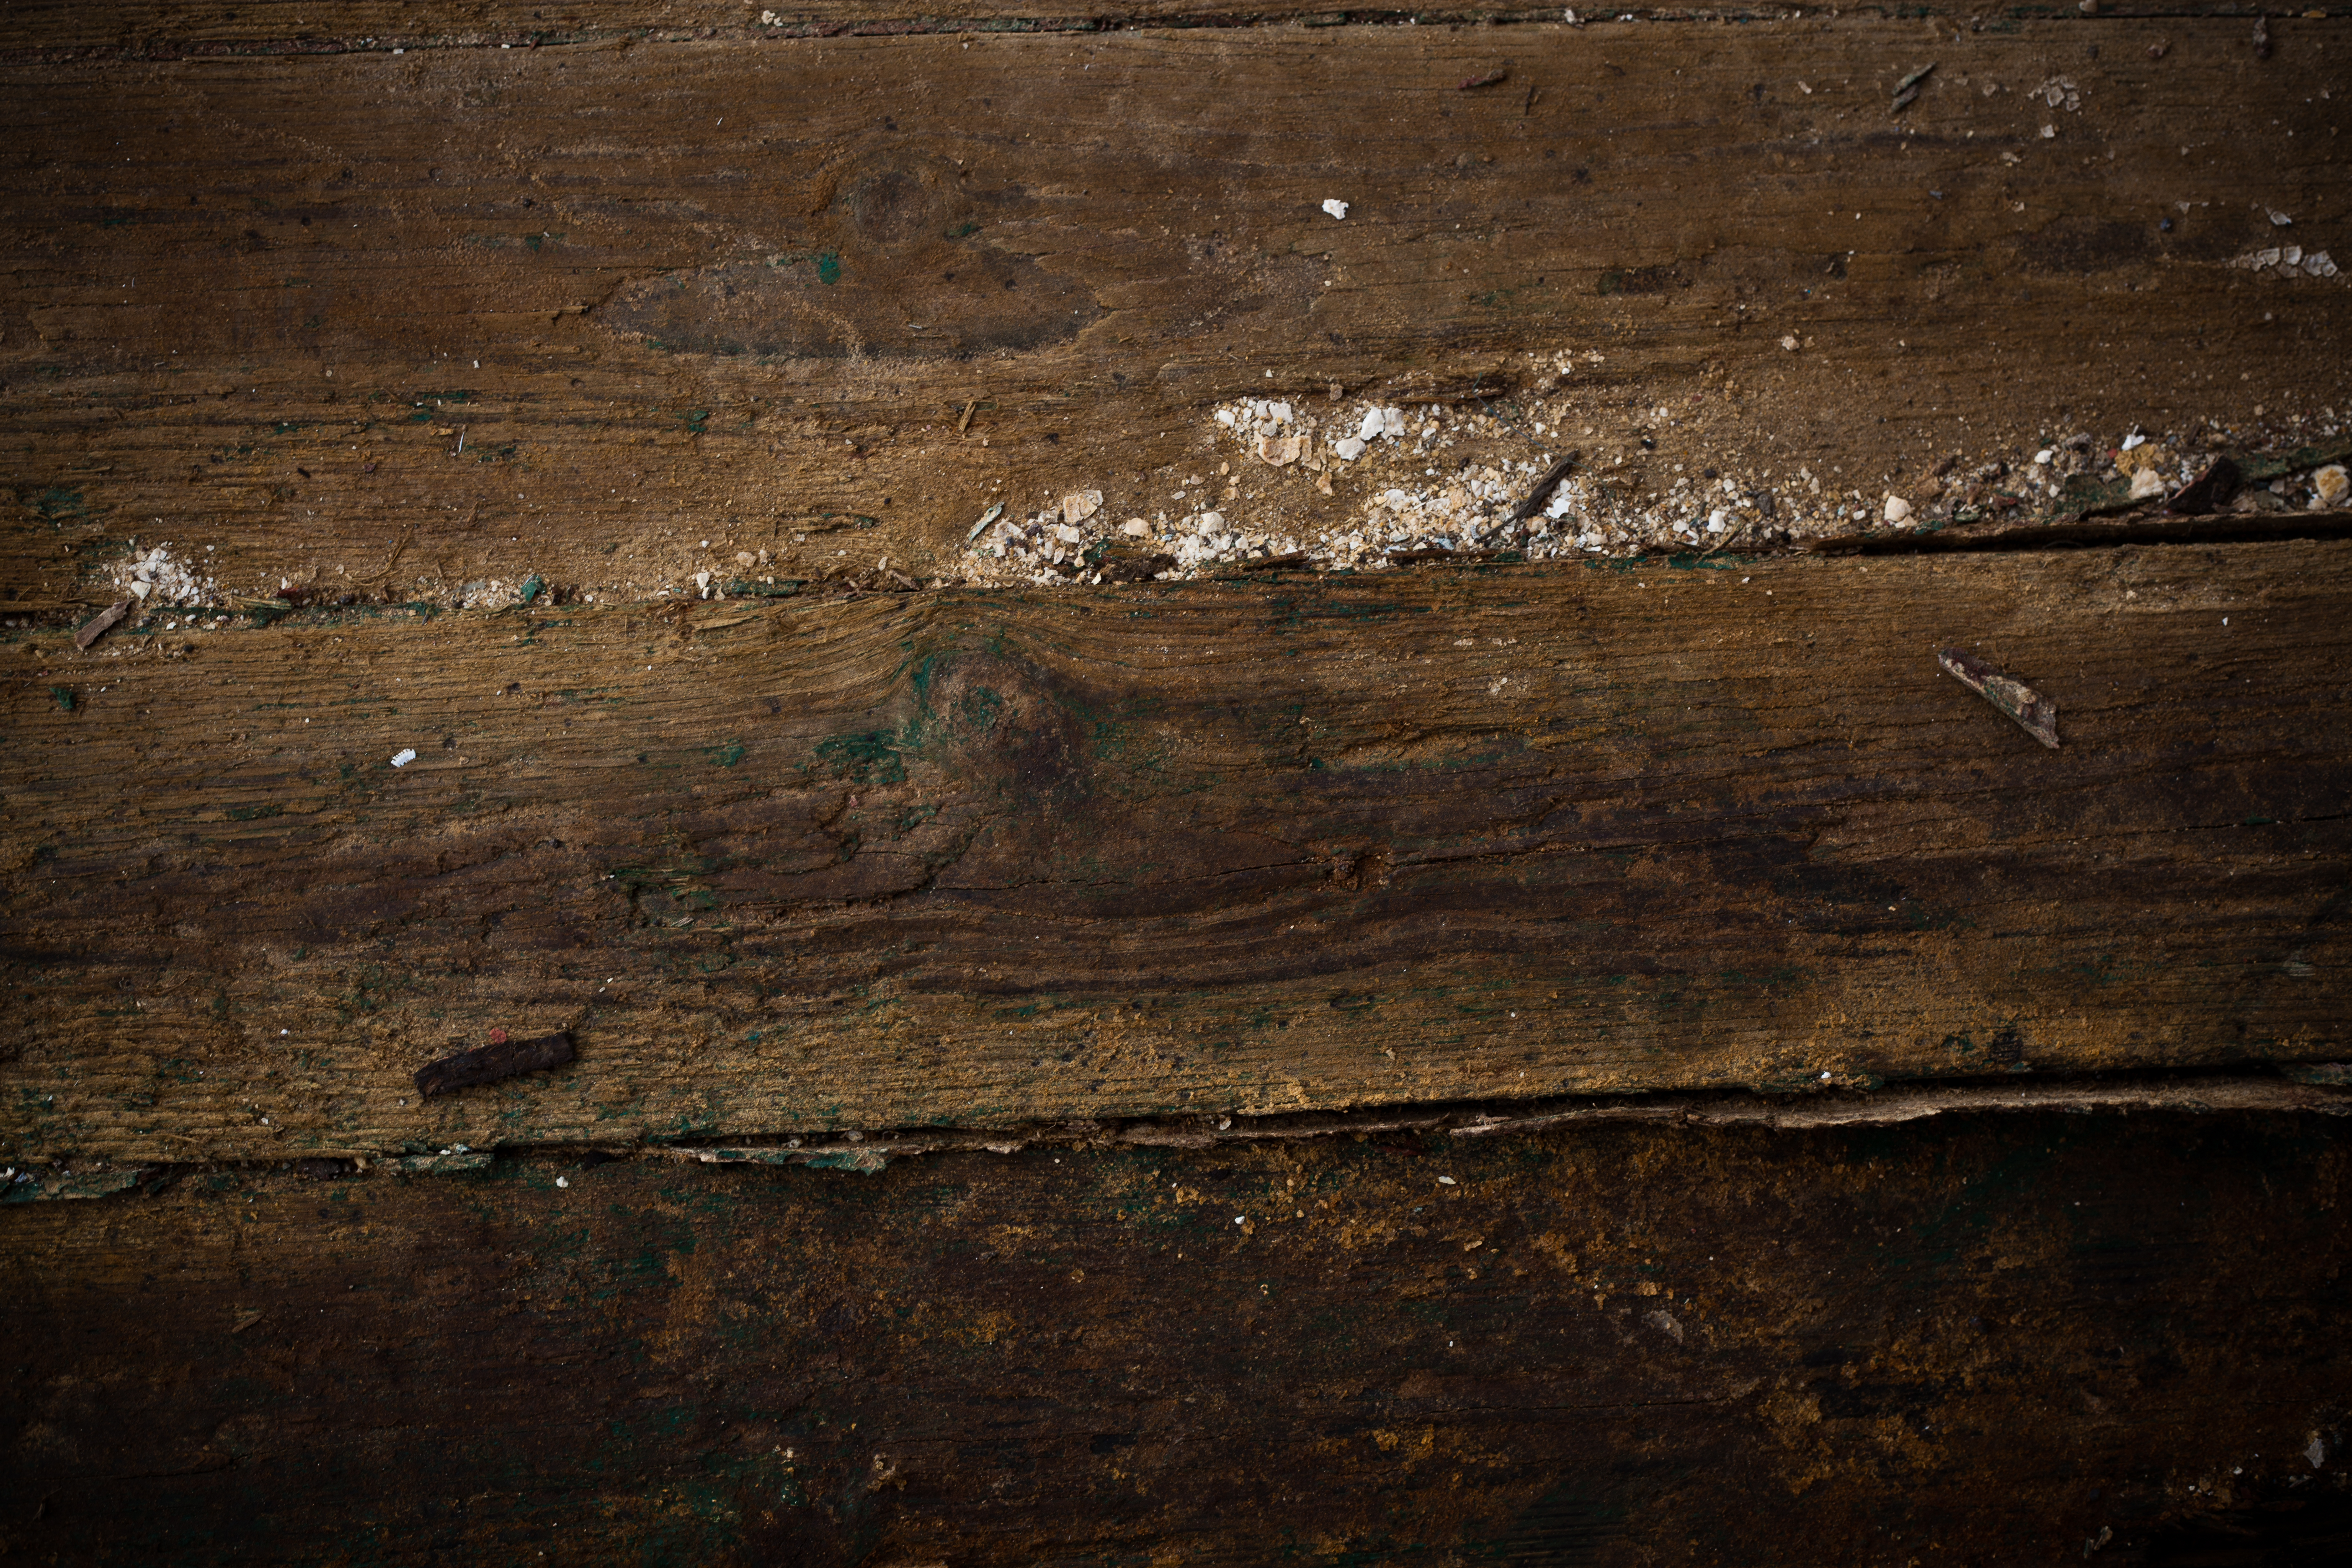 Wooden texture photo